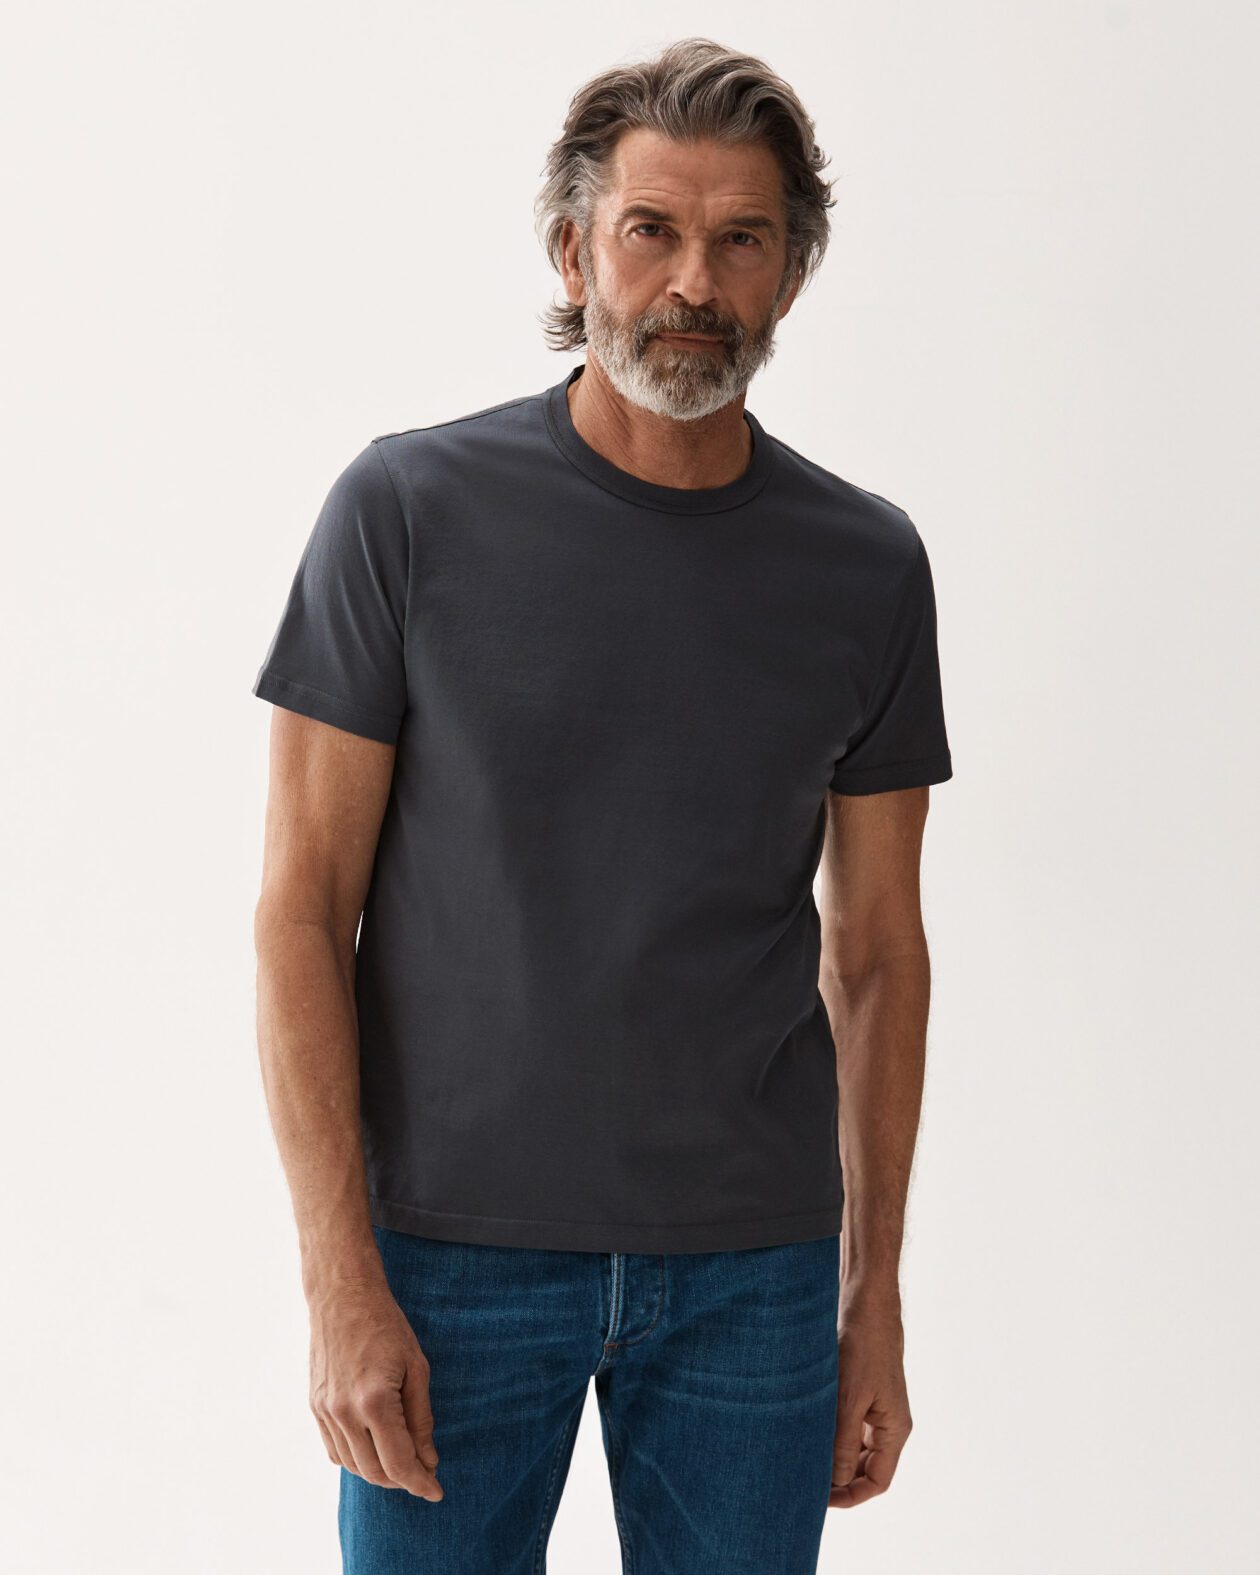 Grey mercerized cotton T-shirt